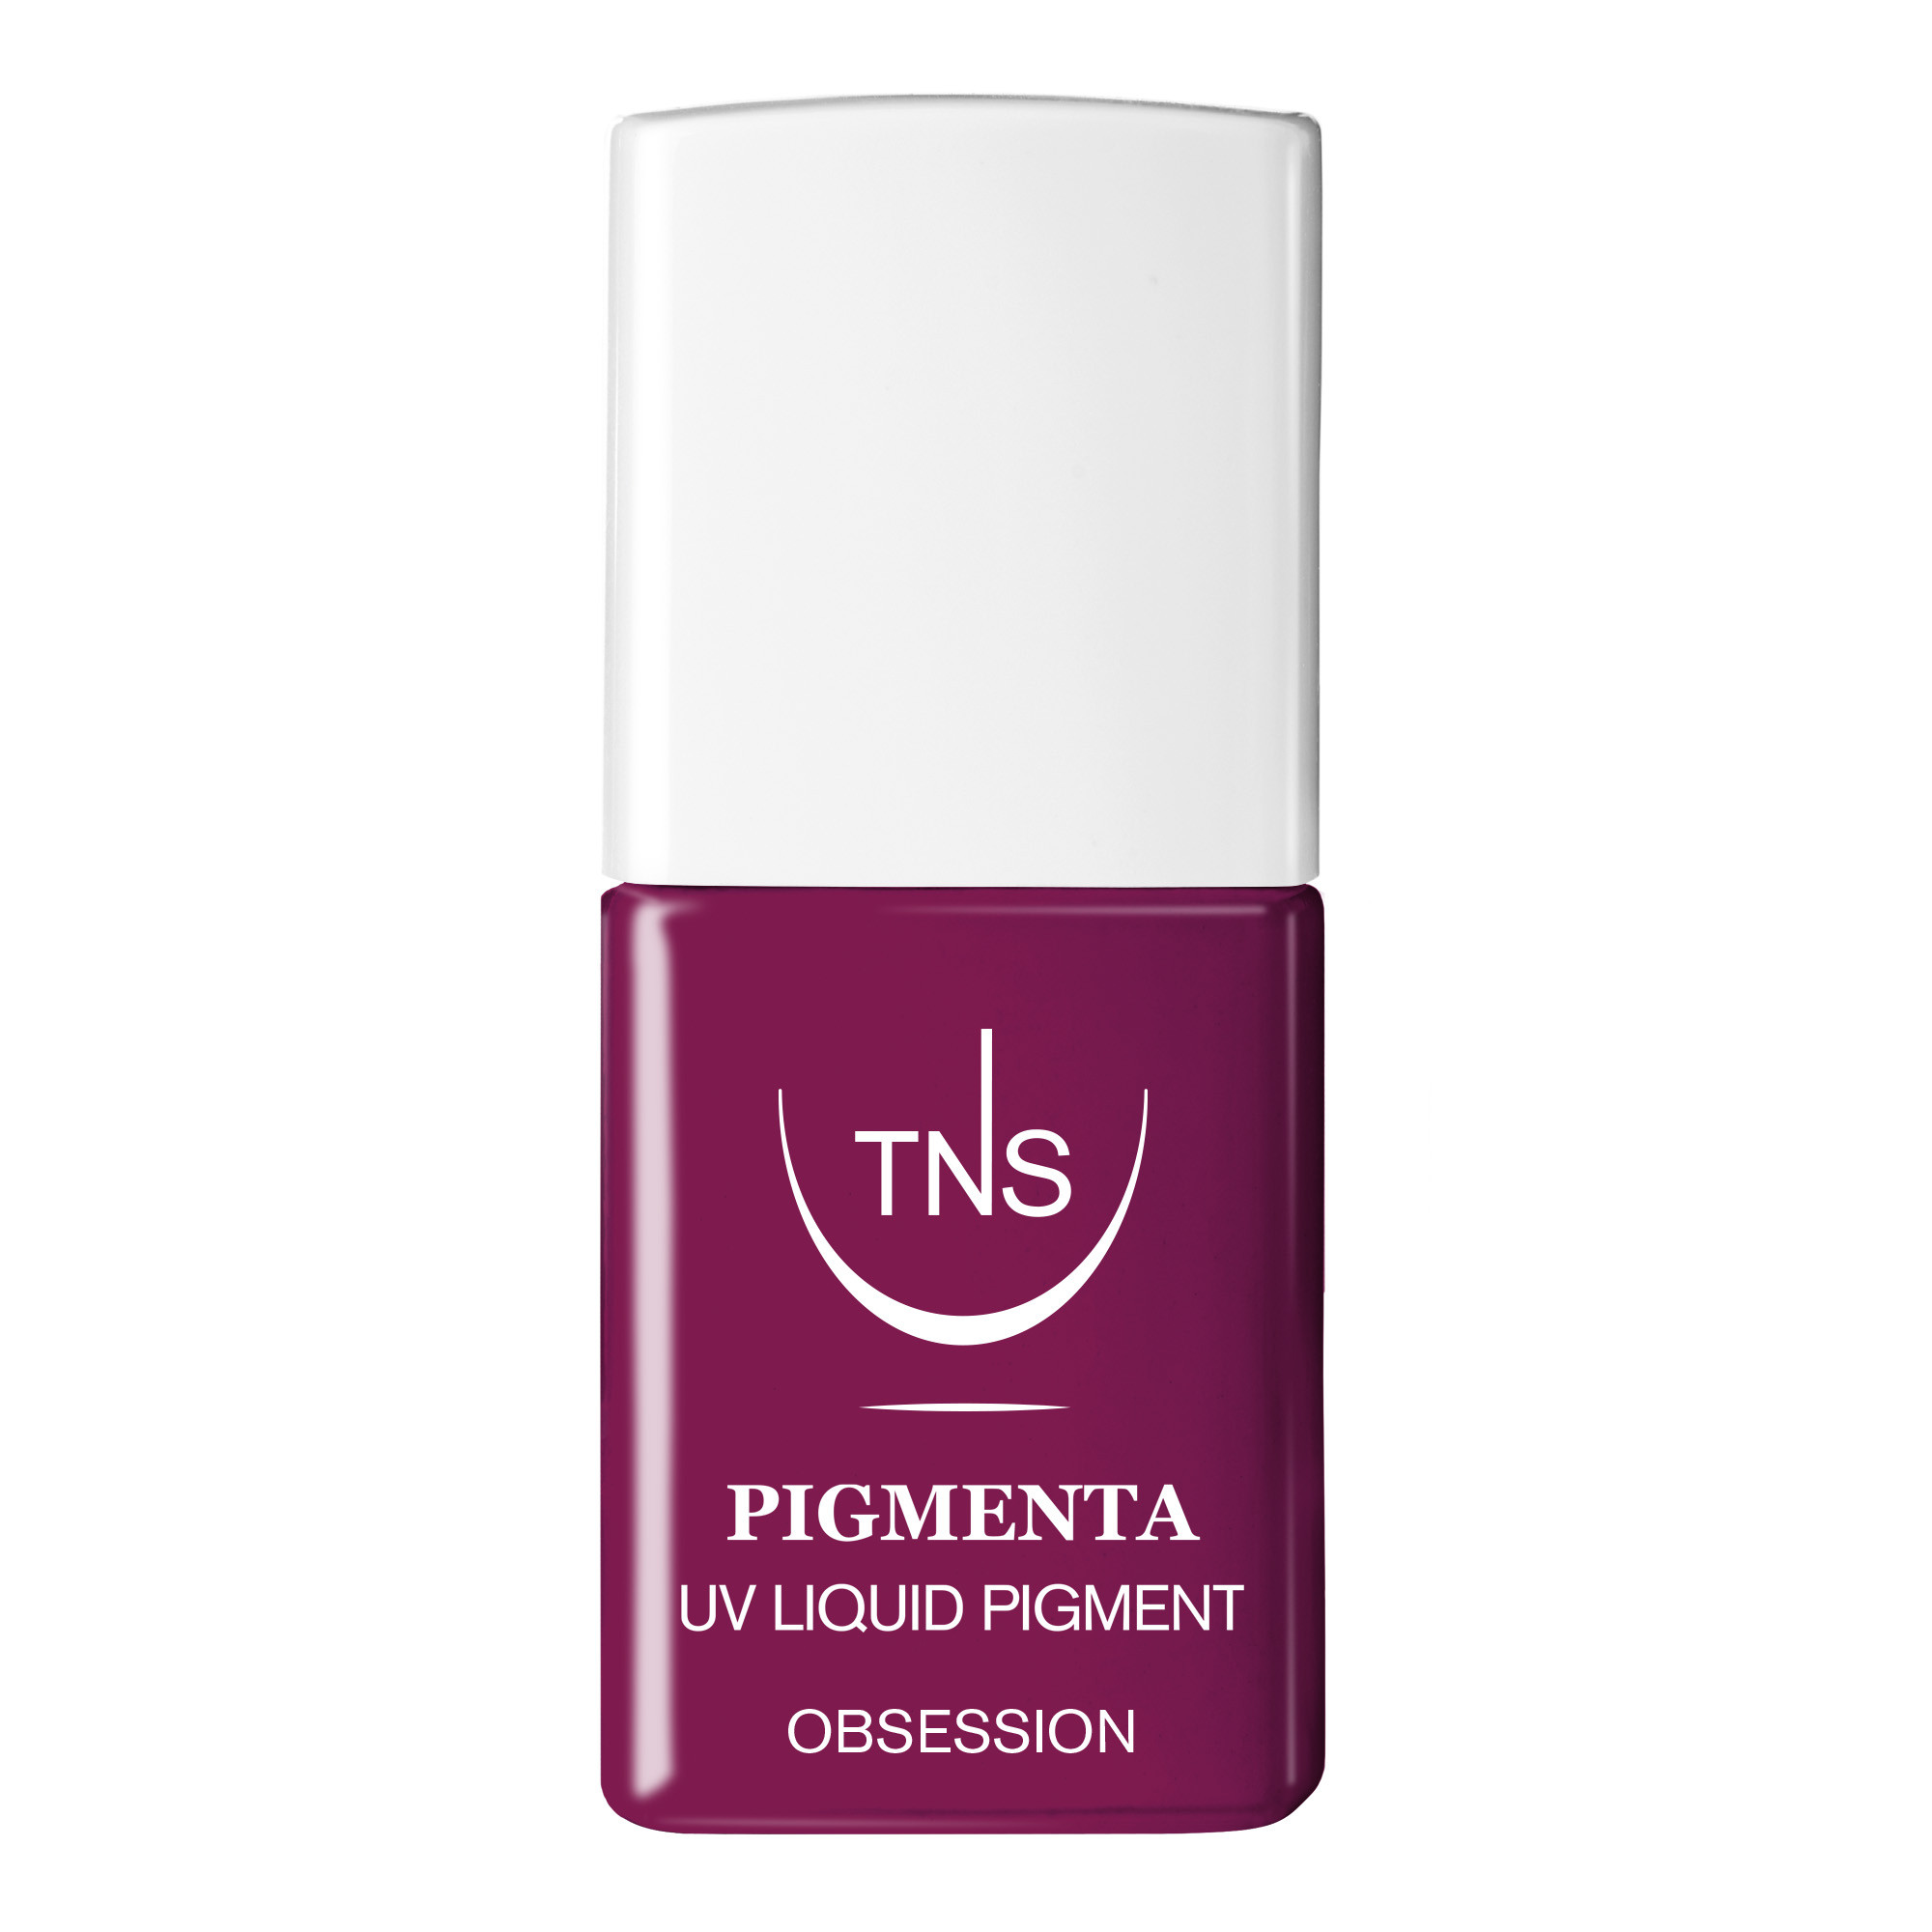 UV Obsession burgunderfarbenes Flüssigpigment 10 ml Pigmenta TNS